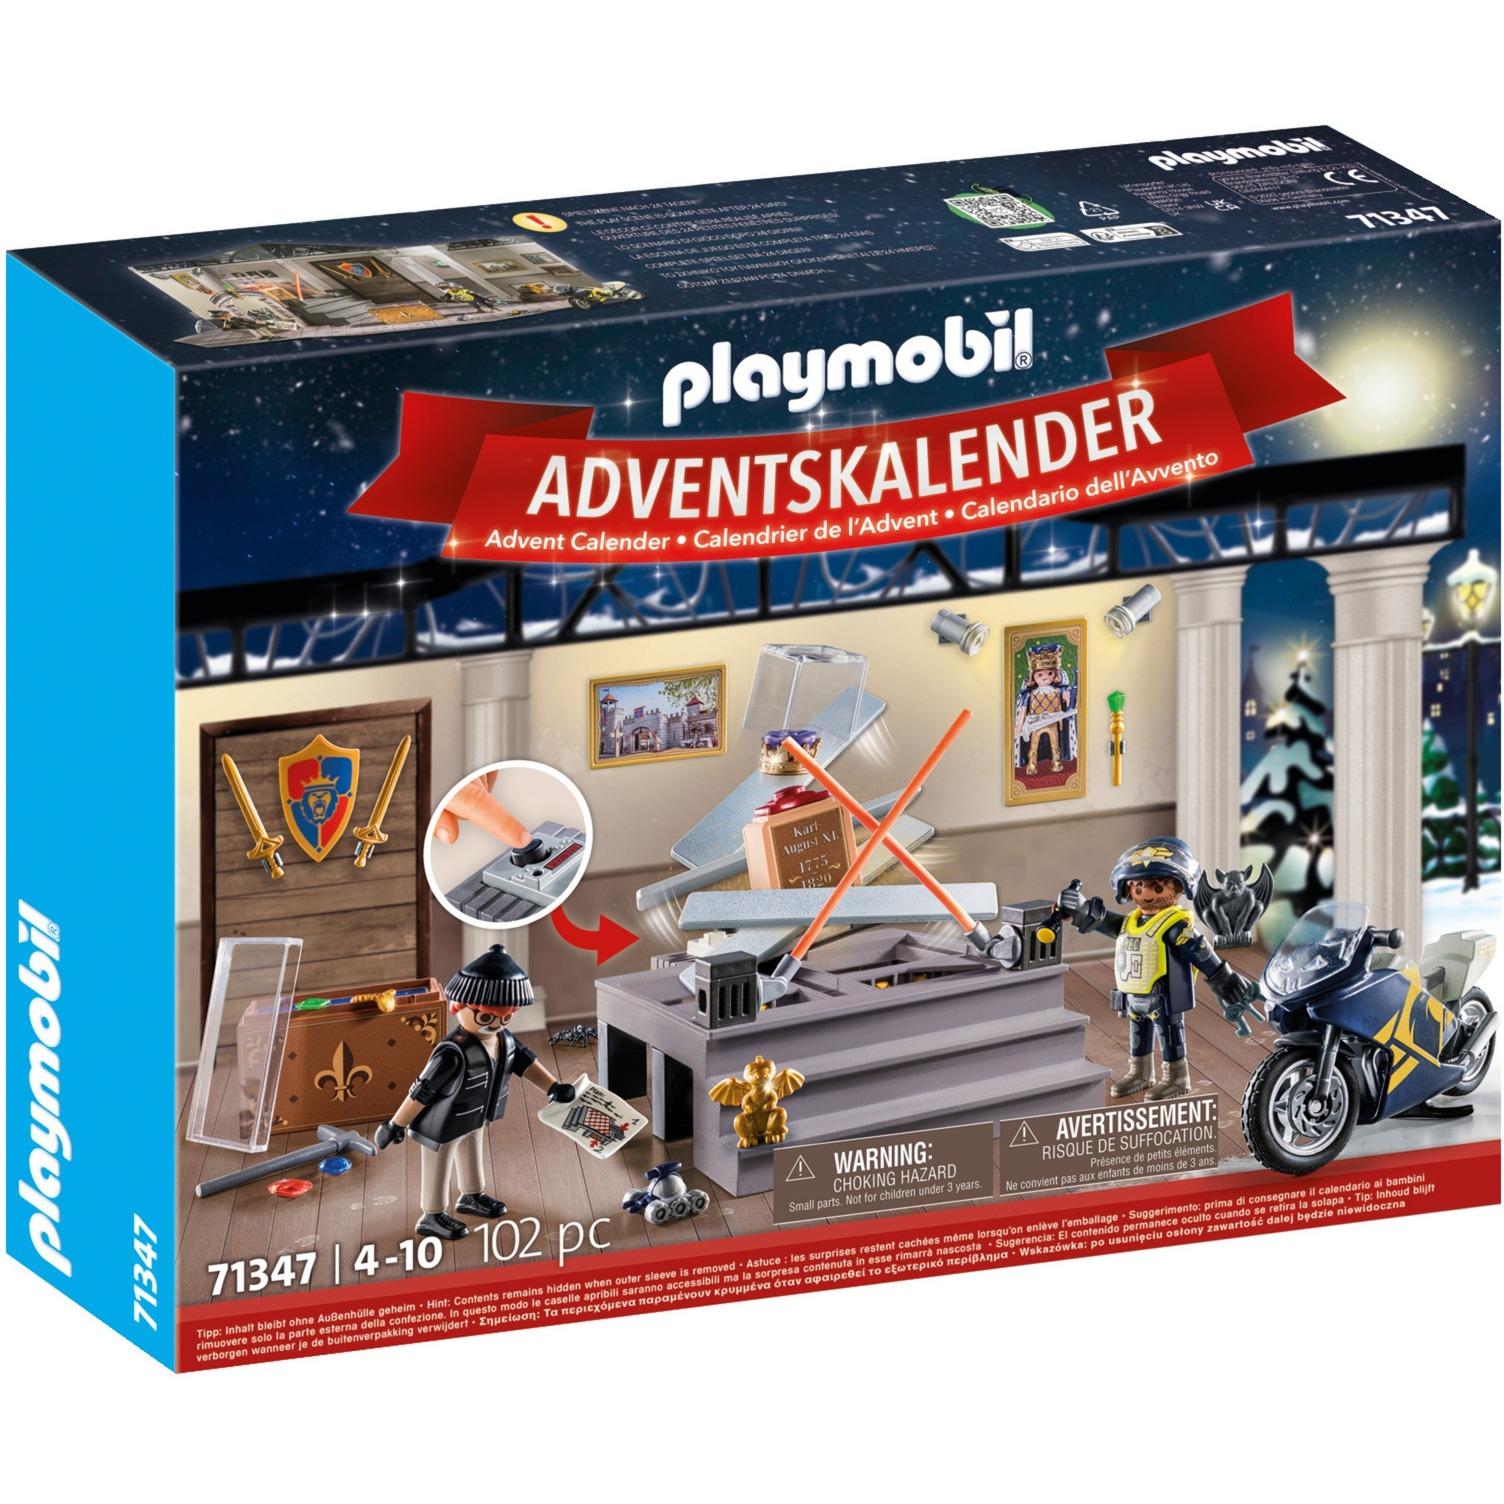 Playmobil 71347 - City Action: Adventskalender Polizei Museumsdiebstahl